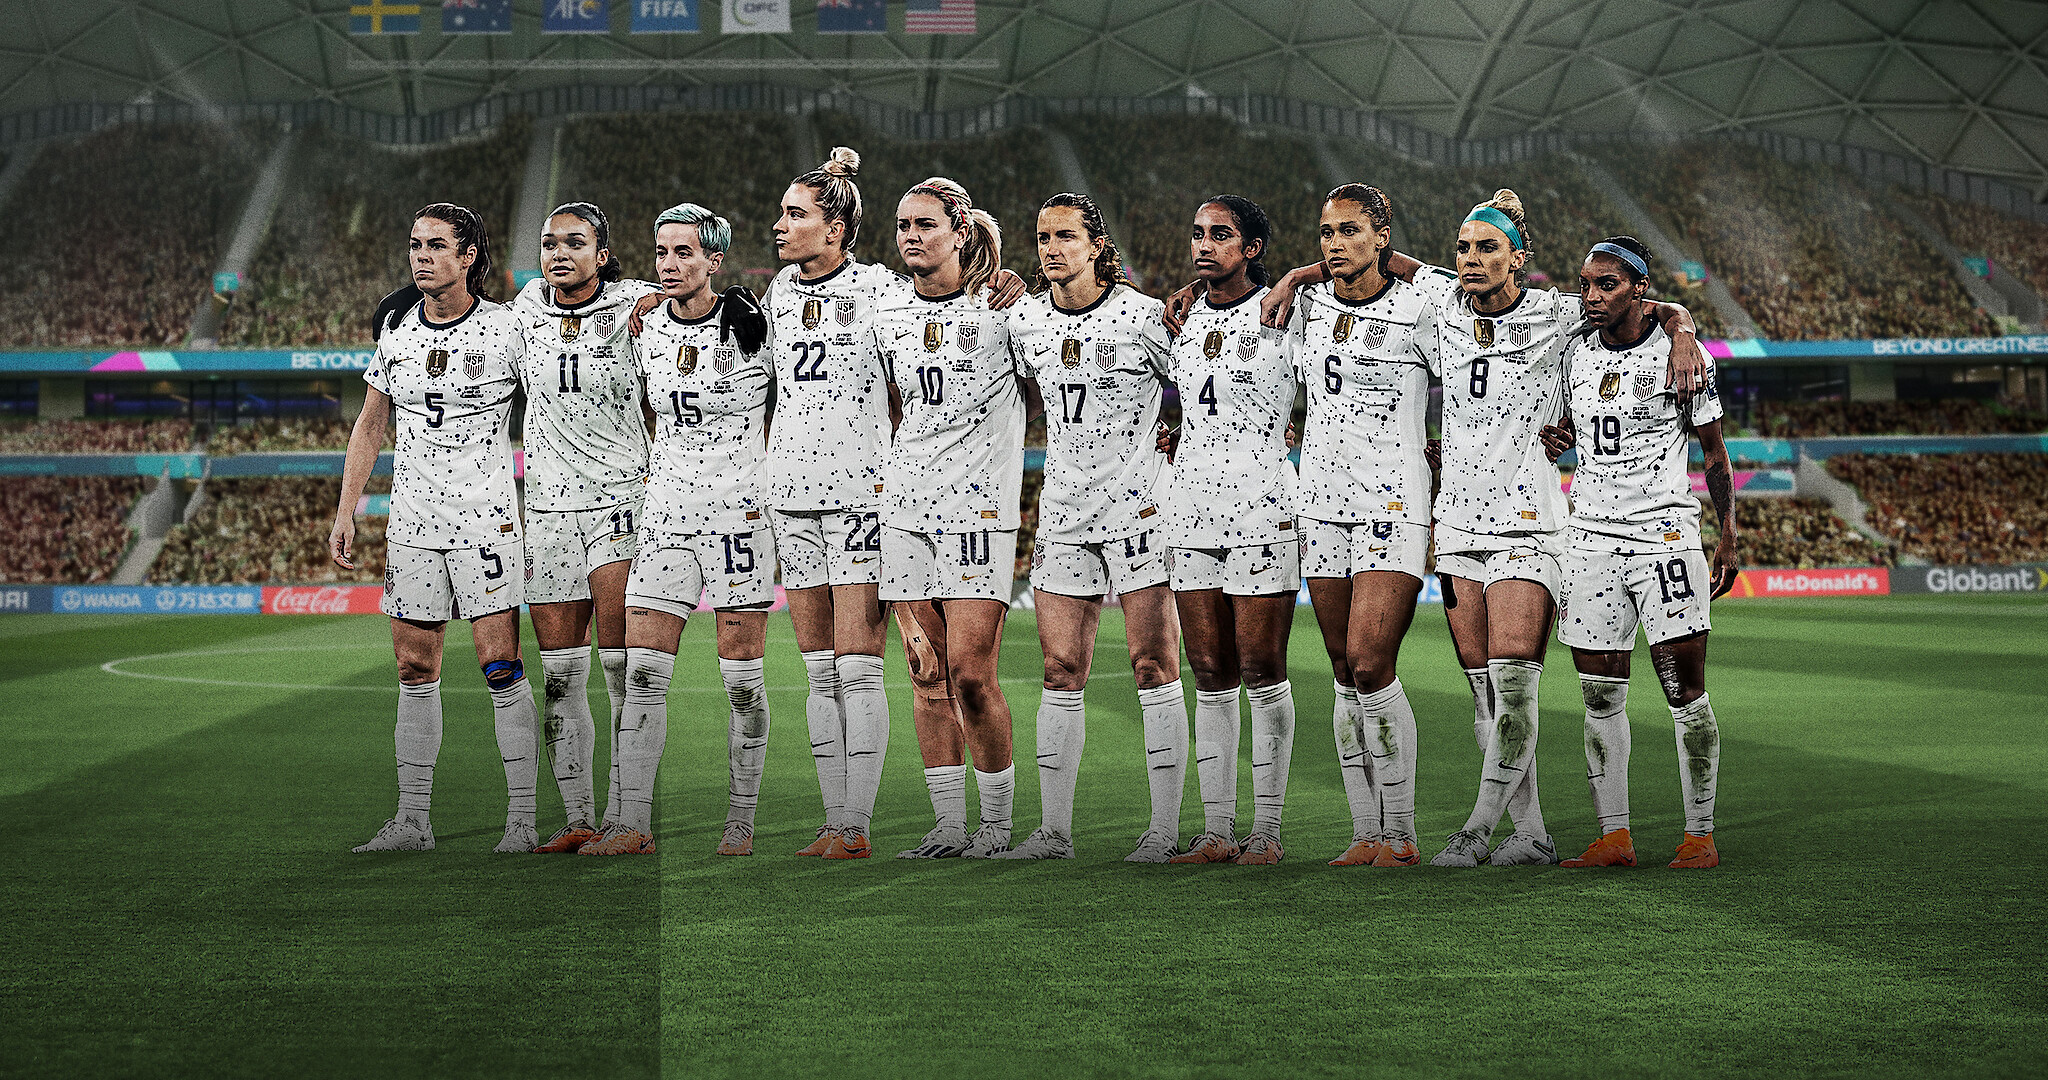 Under Pressure: The U.S. Women's World Cup Team Cast, News, Videos